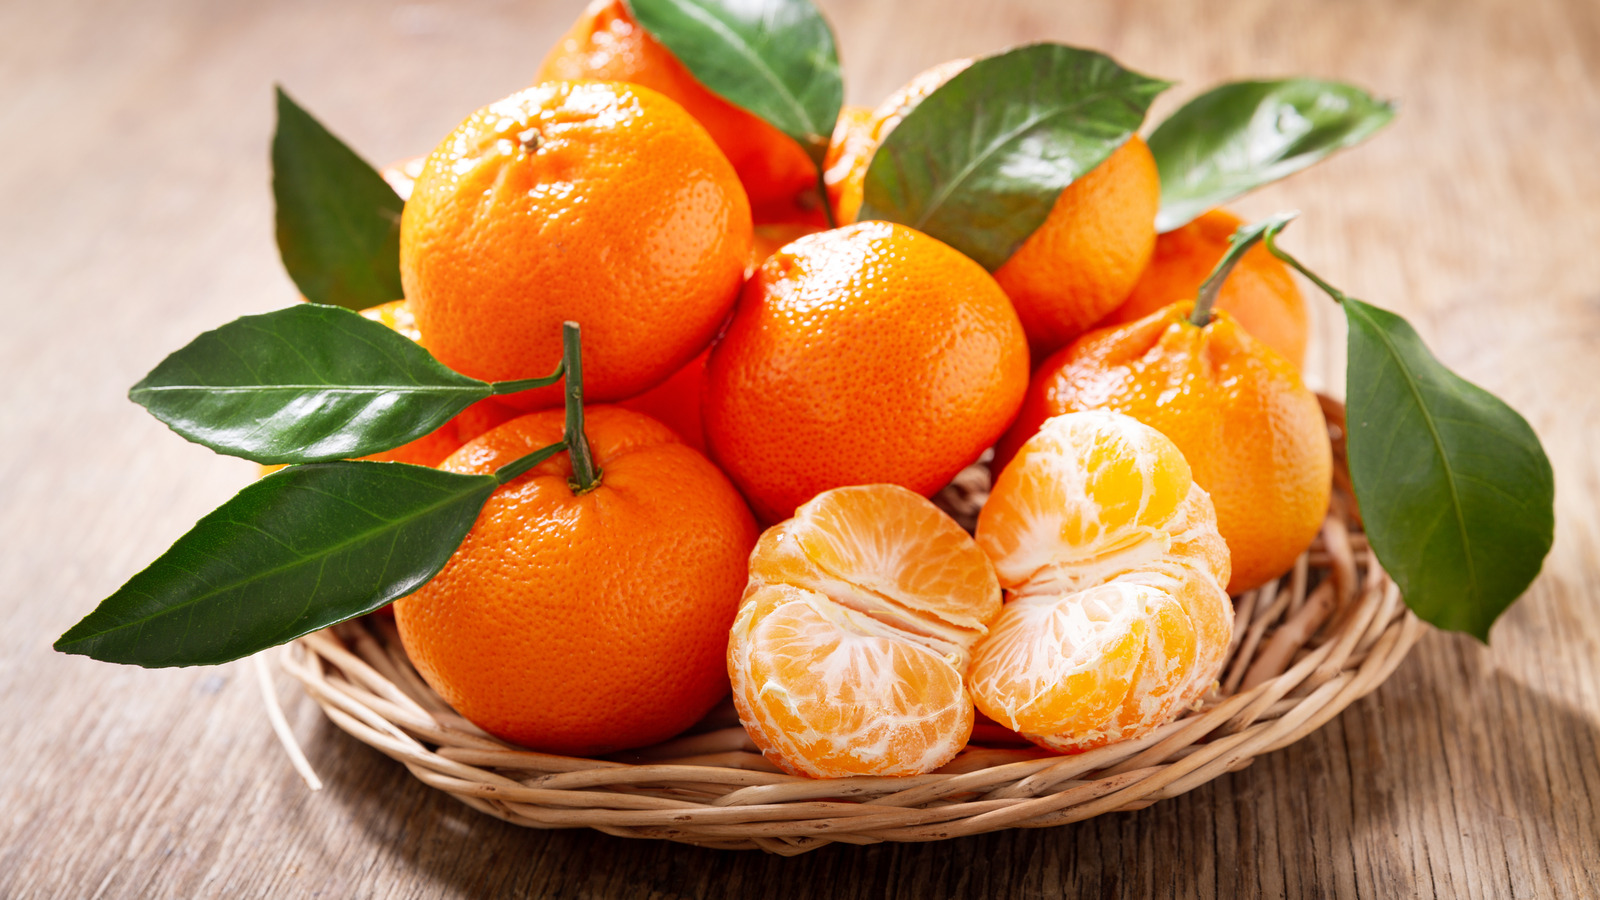 5 Ways to Use Orange Peels